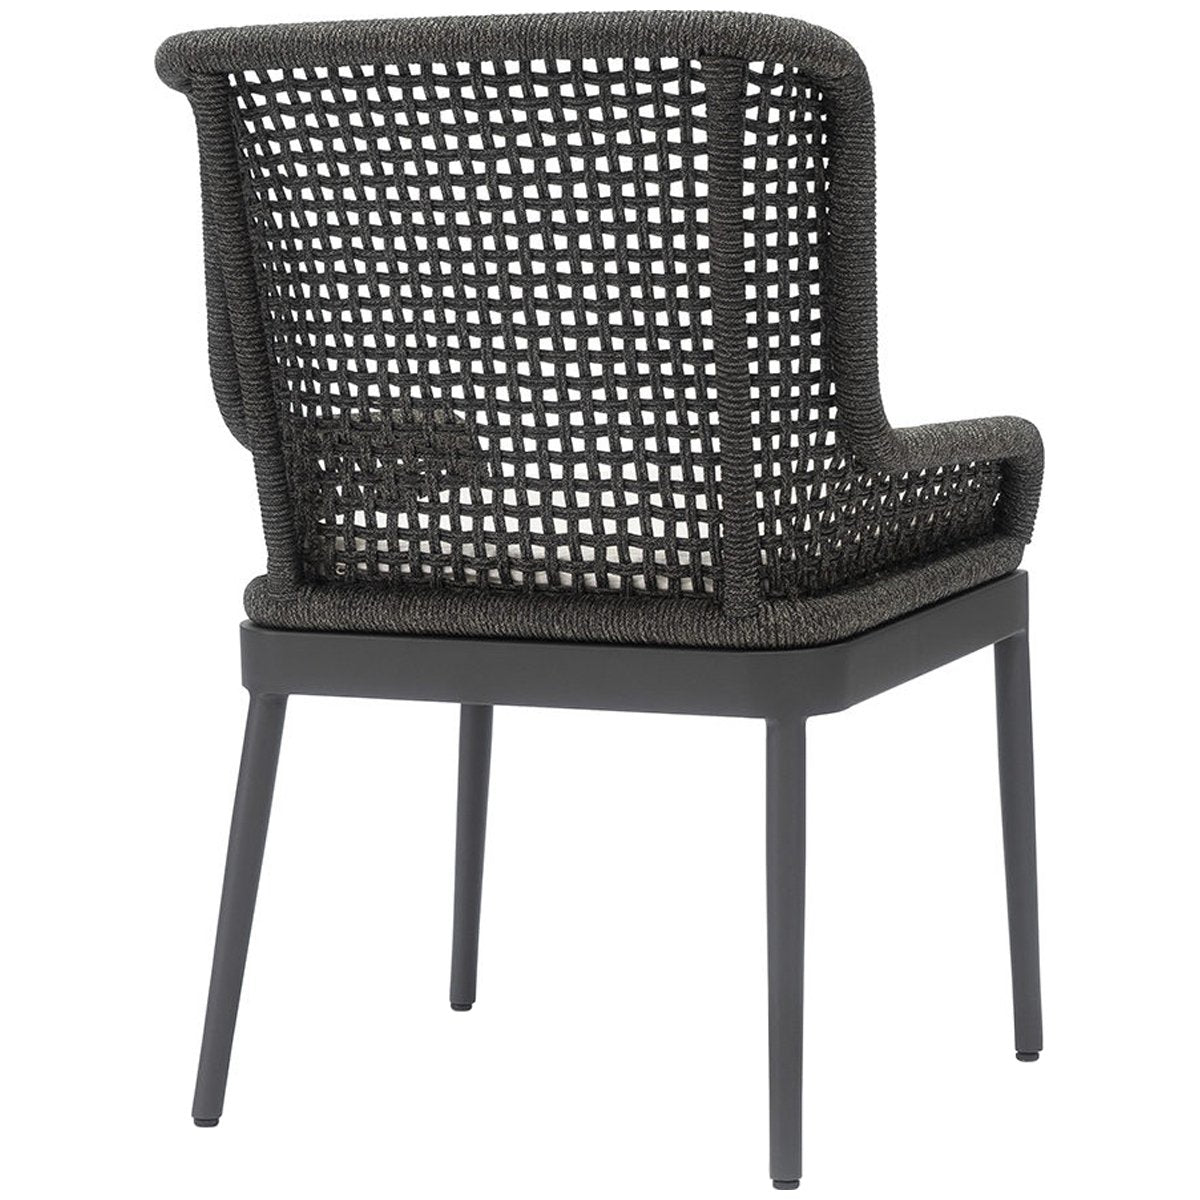 Palecek Somerset Outdoor Side Chair